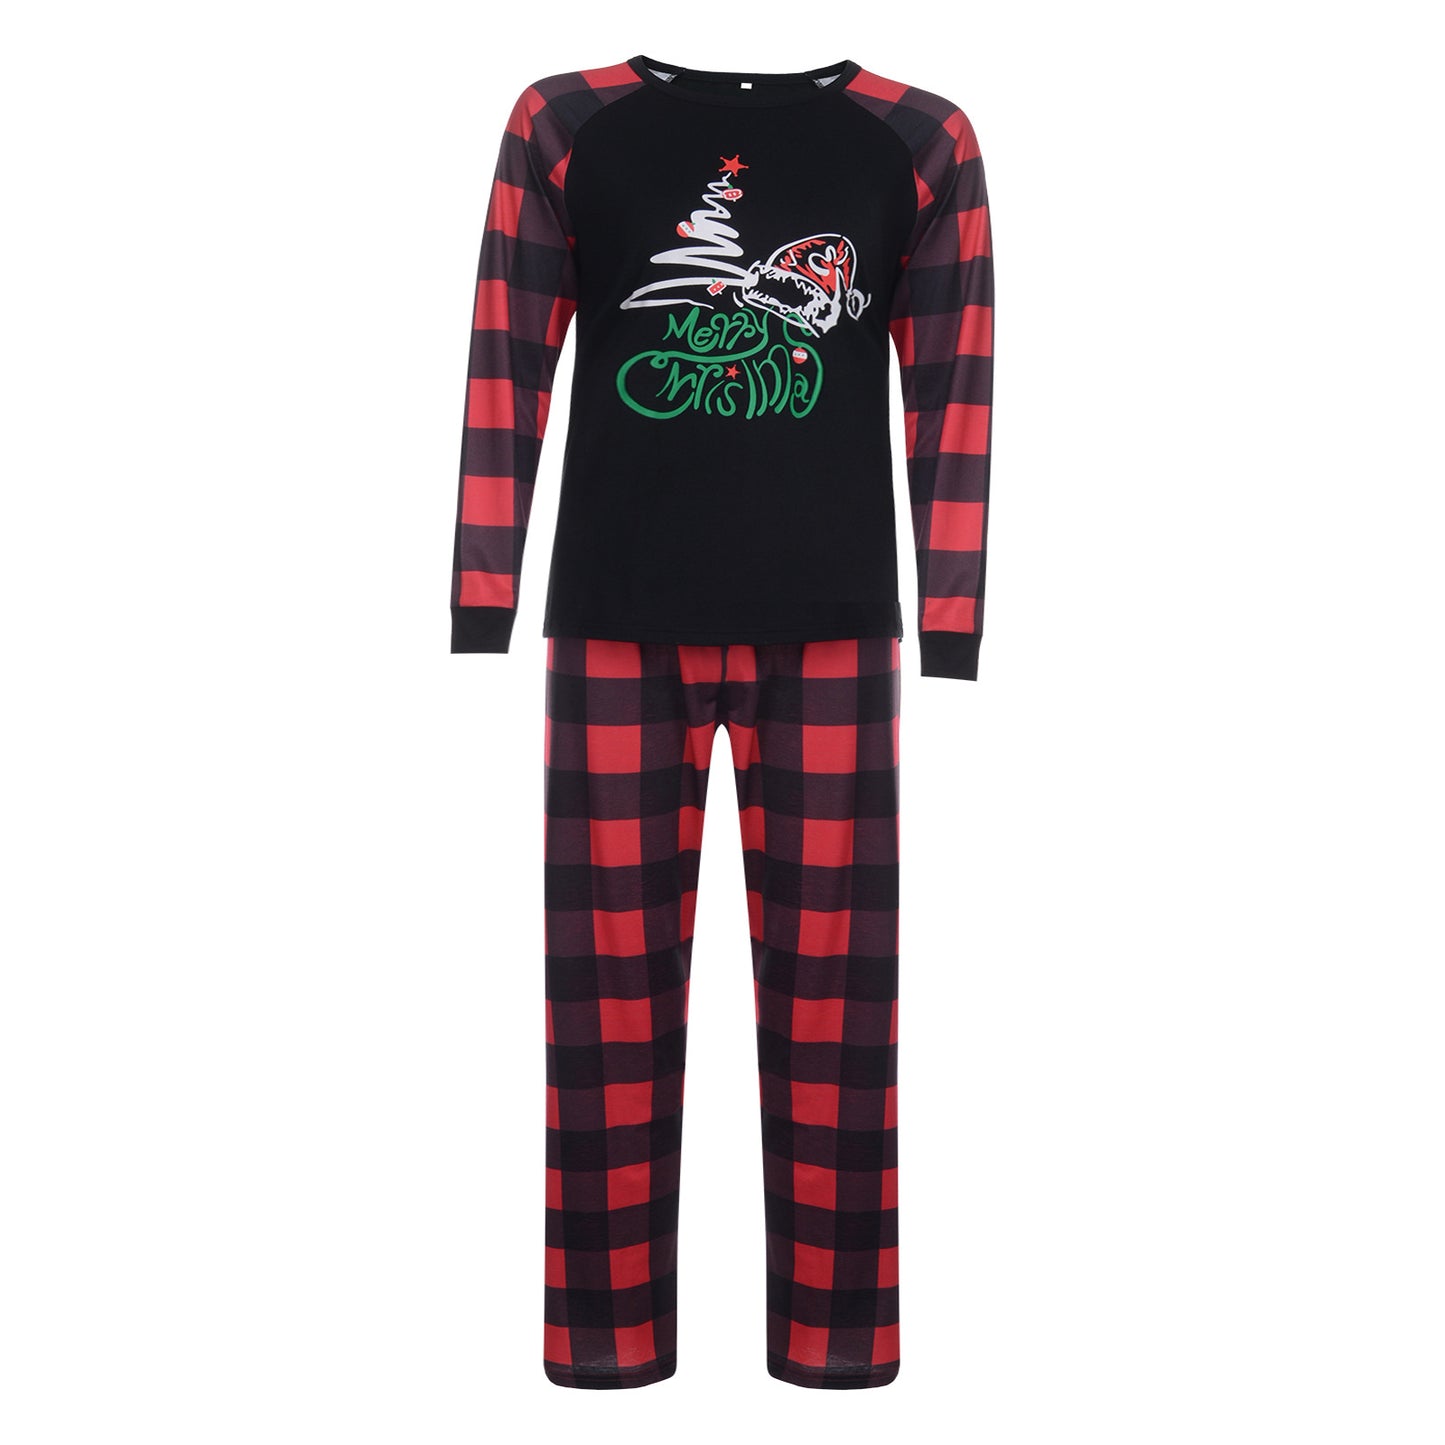 Family Matching Pajamas with Christmas Hat Tree Plaid